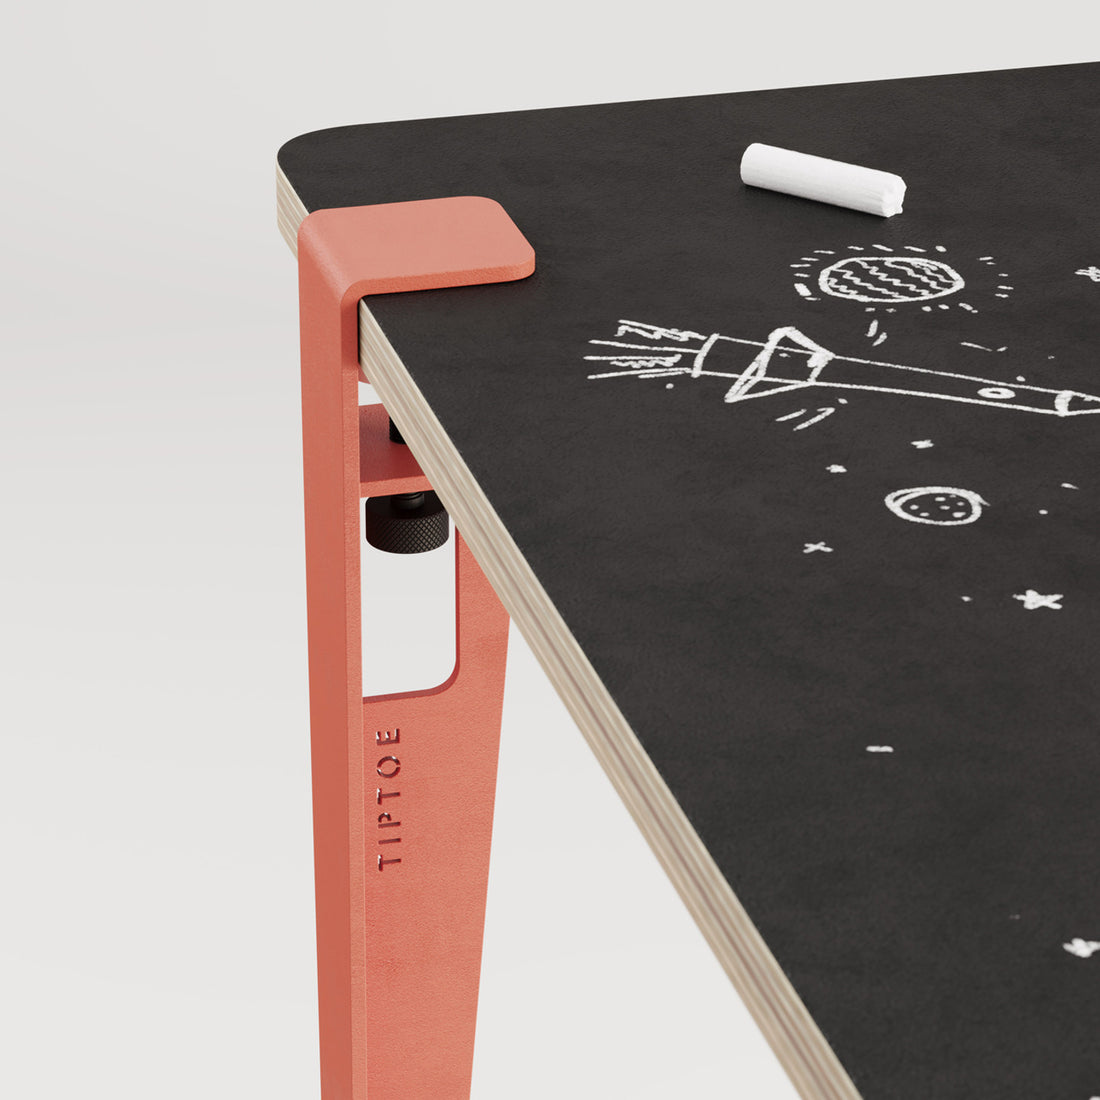 tiptoe-kids-desk-virce-versa-blackboard-&-white-tabletop-with-legs-flamingo-pink-70x50cm-tipt-stt07005023p02-tle050st1mz63 (6)